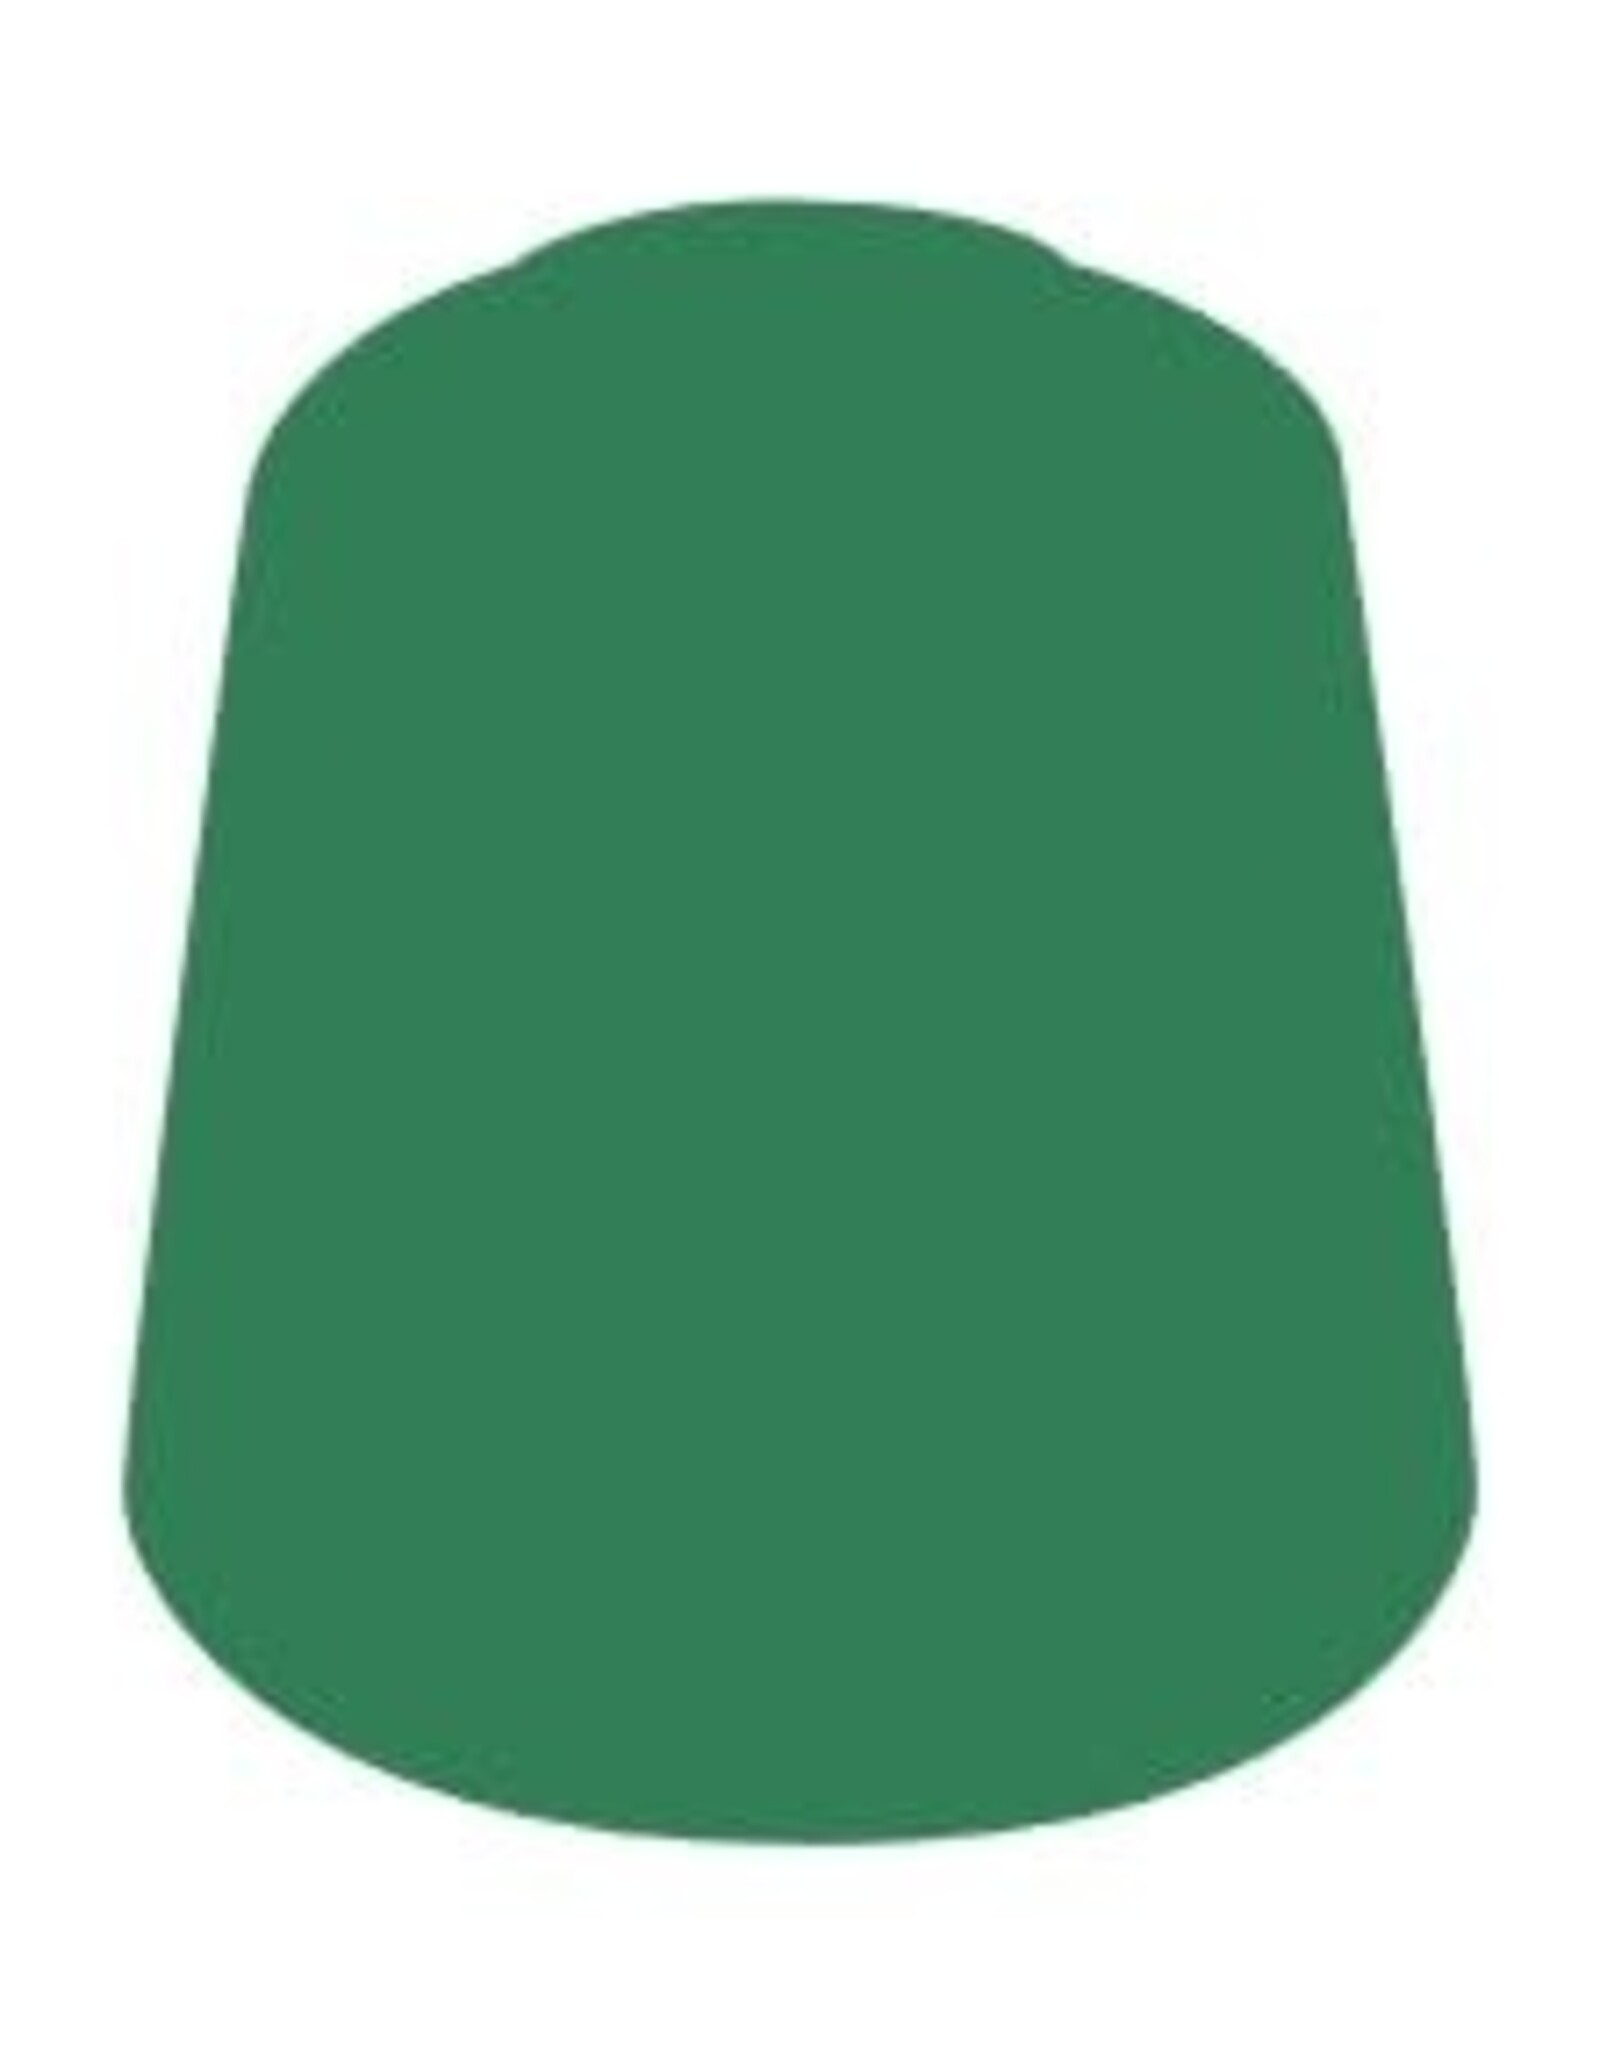 Warboss Green